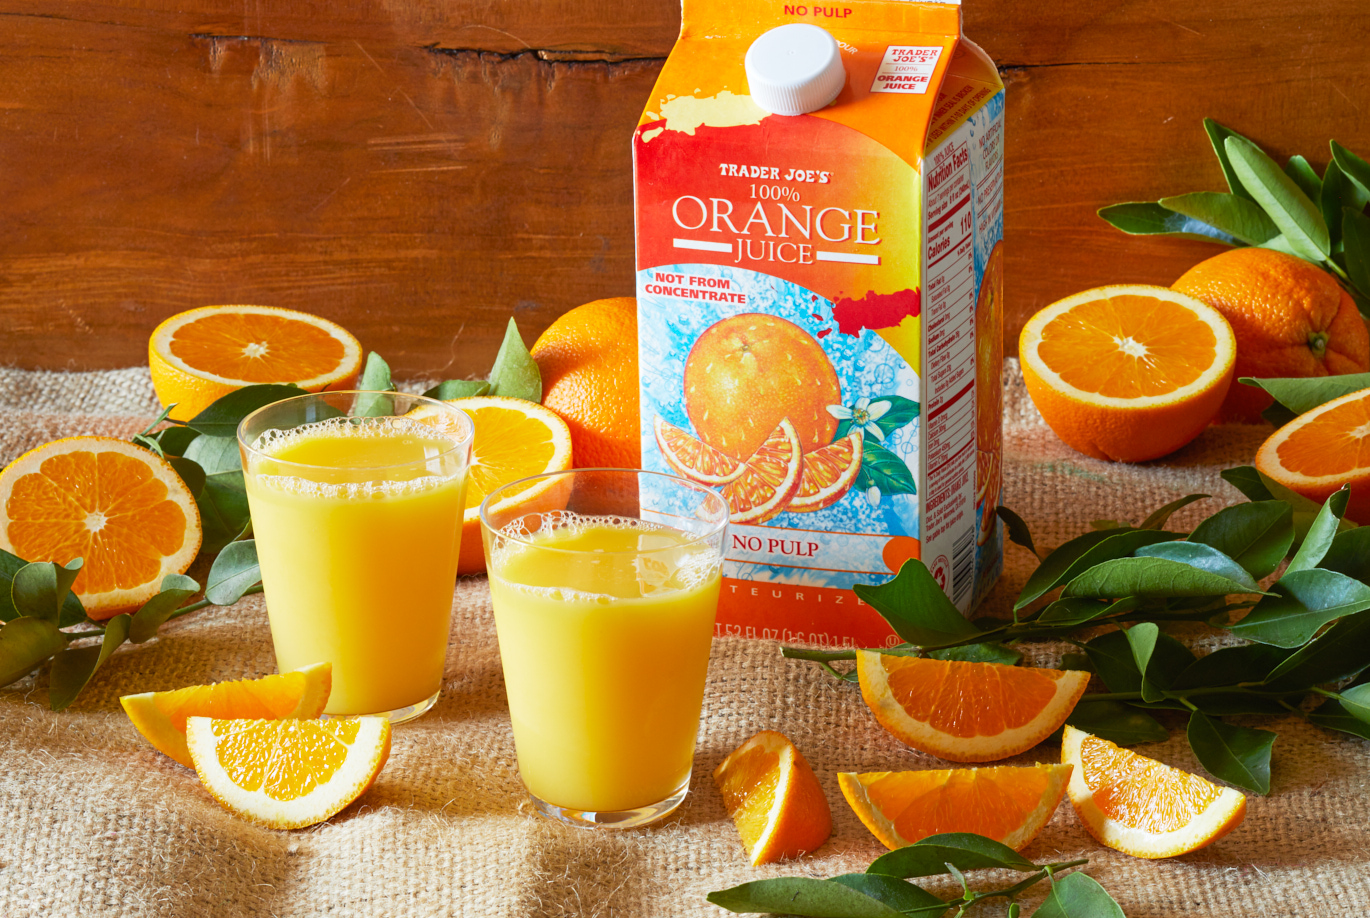 Simply® Orange Pulp Free - 100% Pure Squeezed OJ